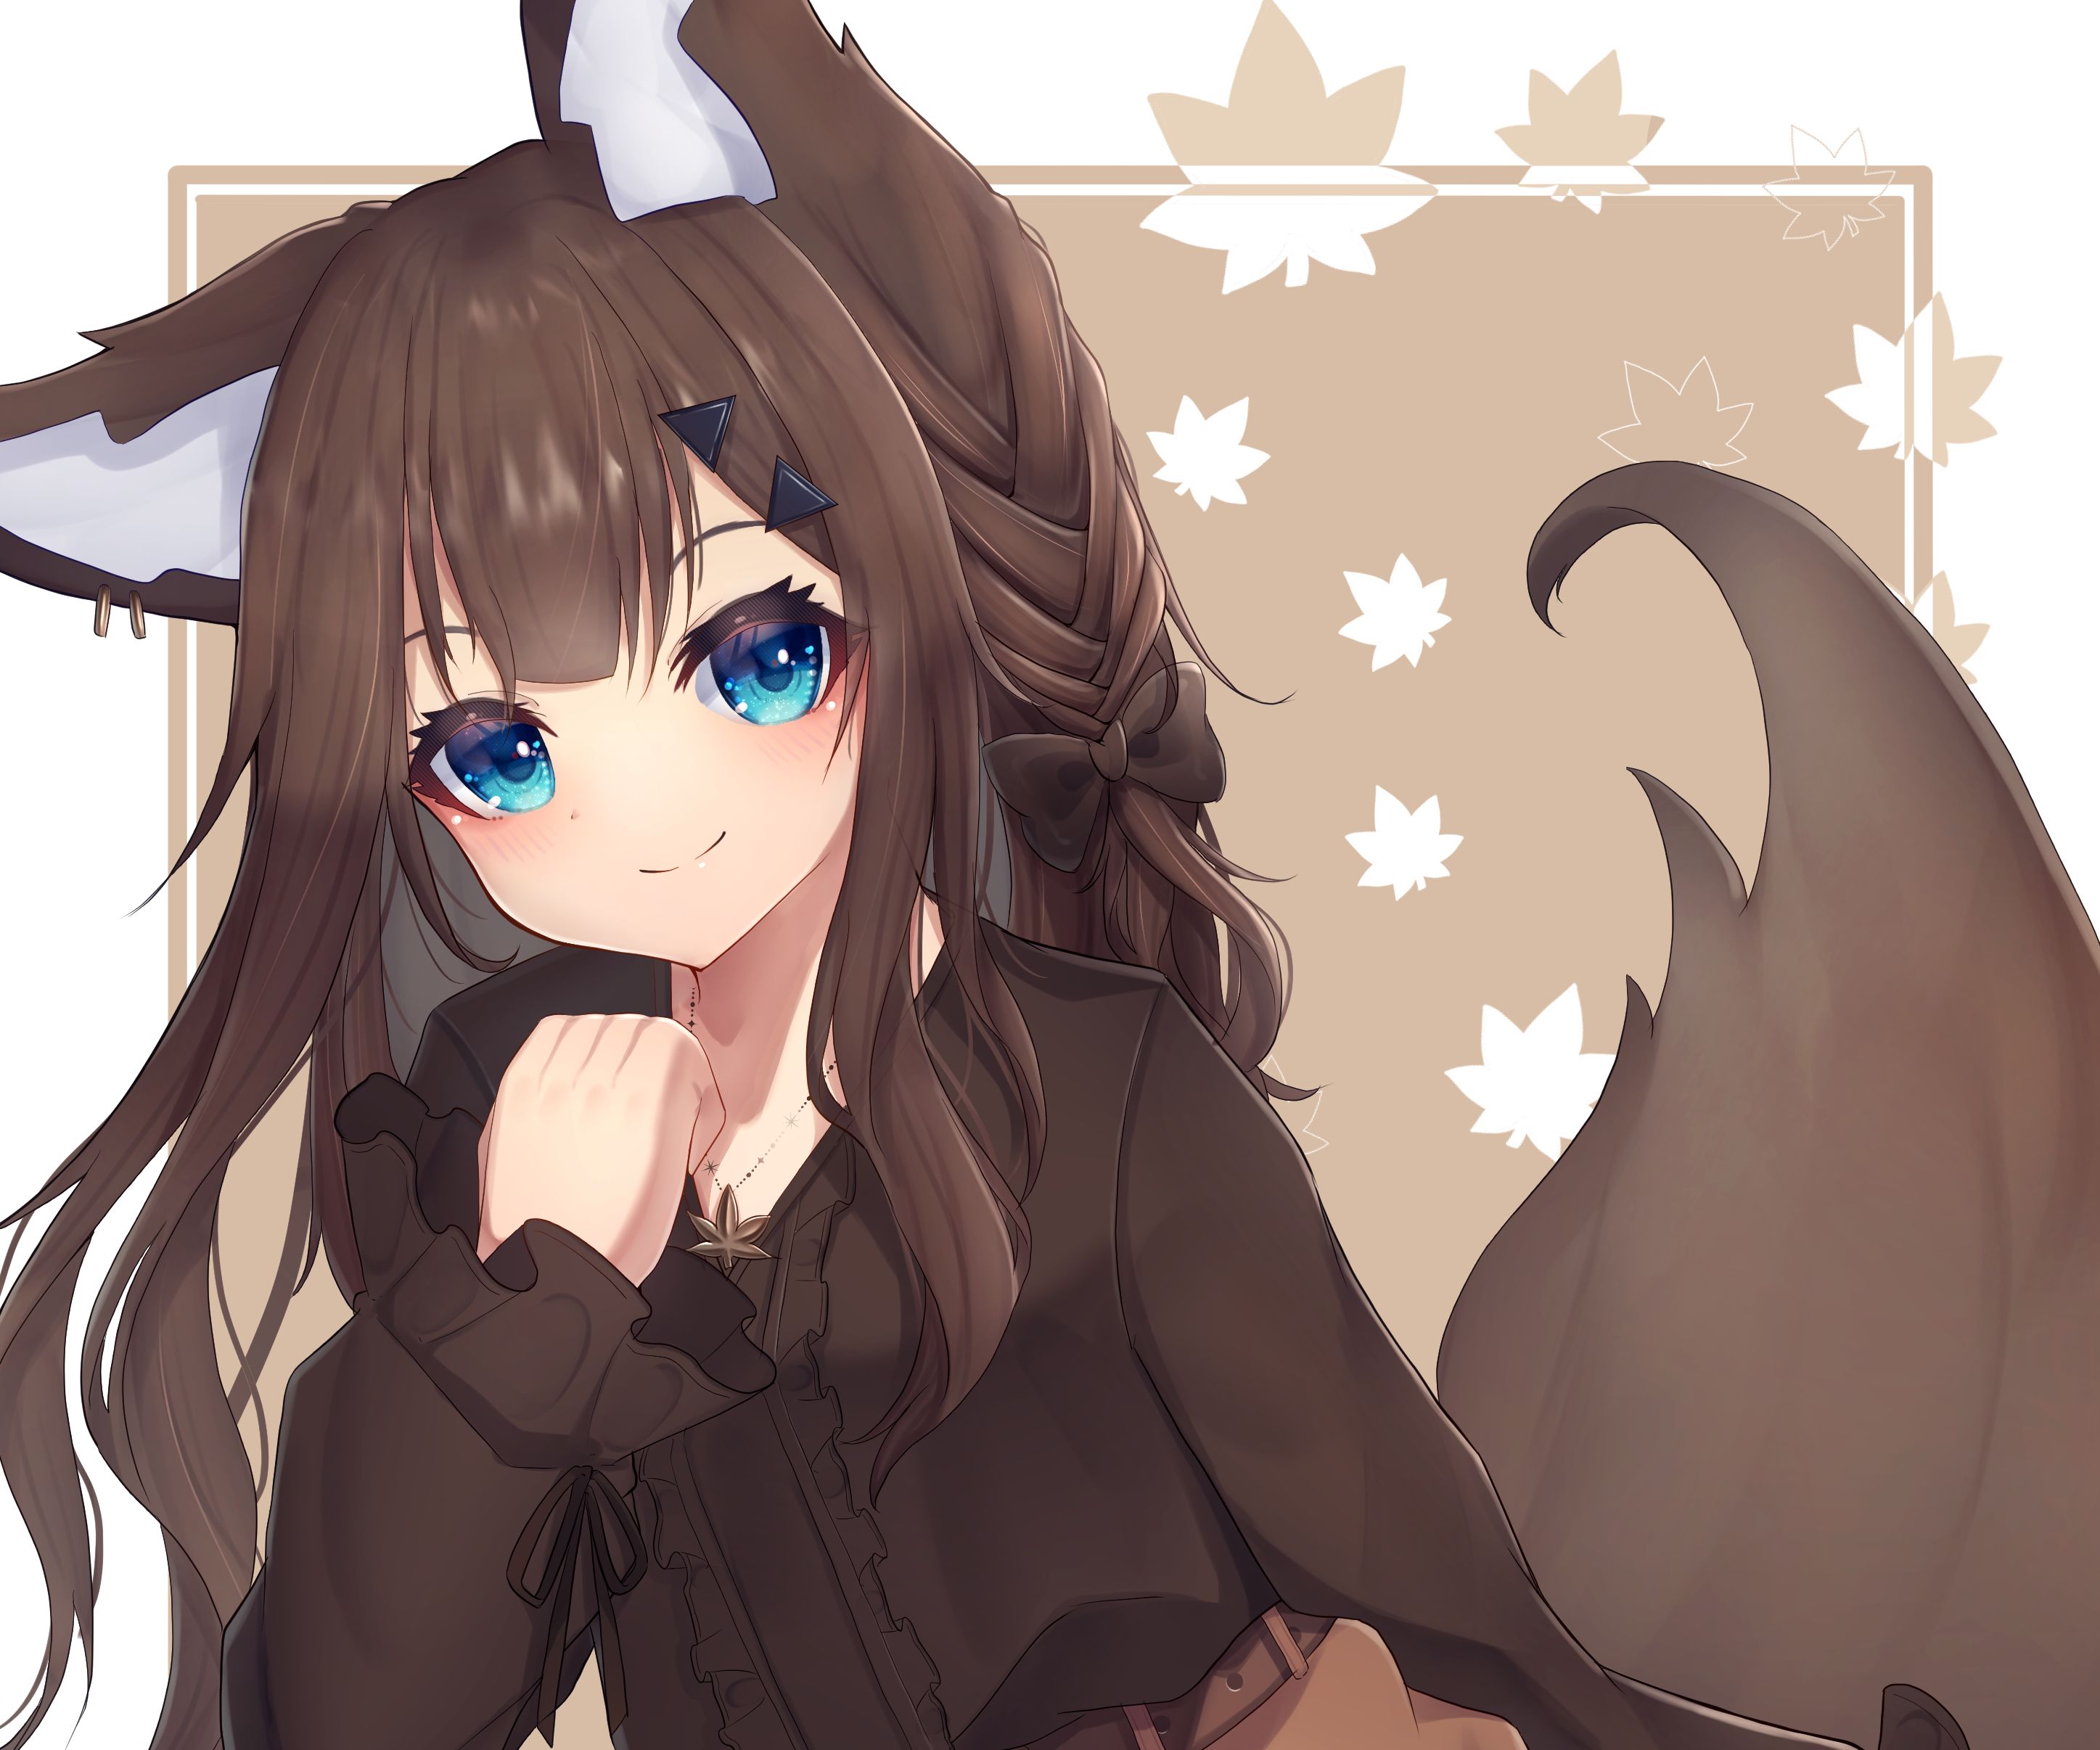 anime girl with wolf ears